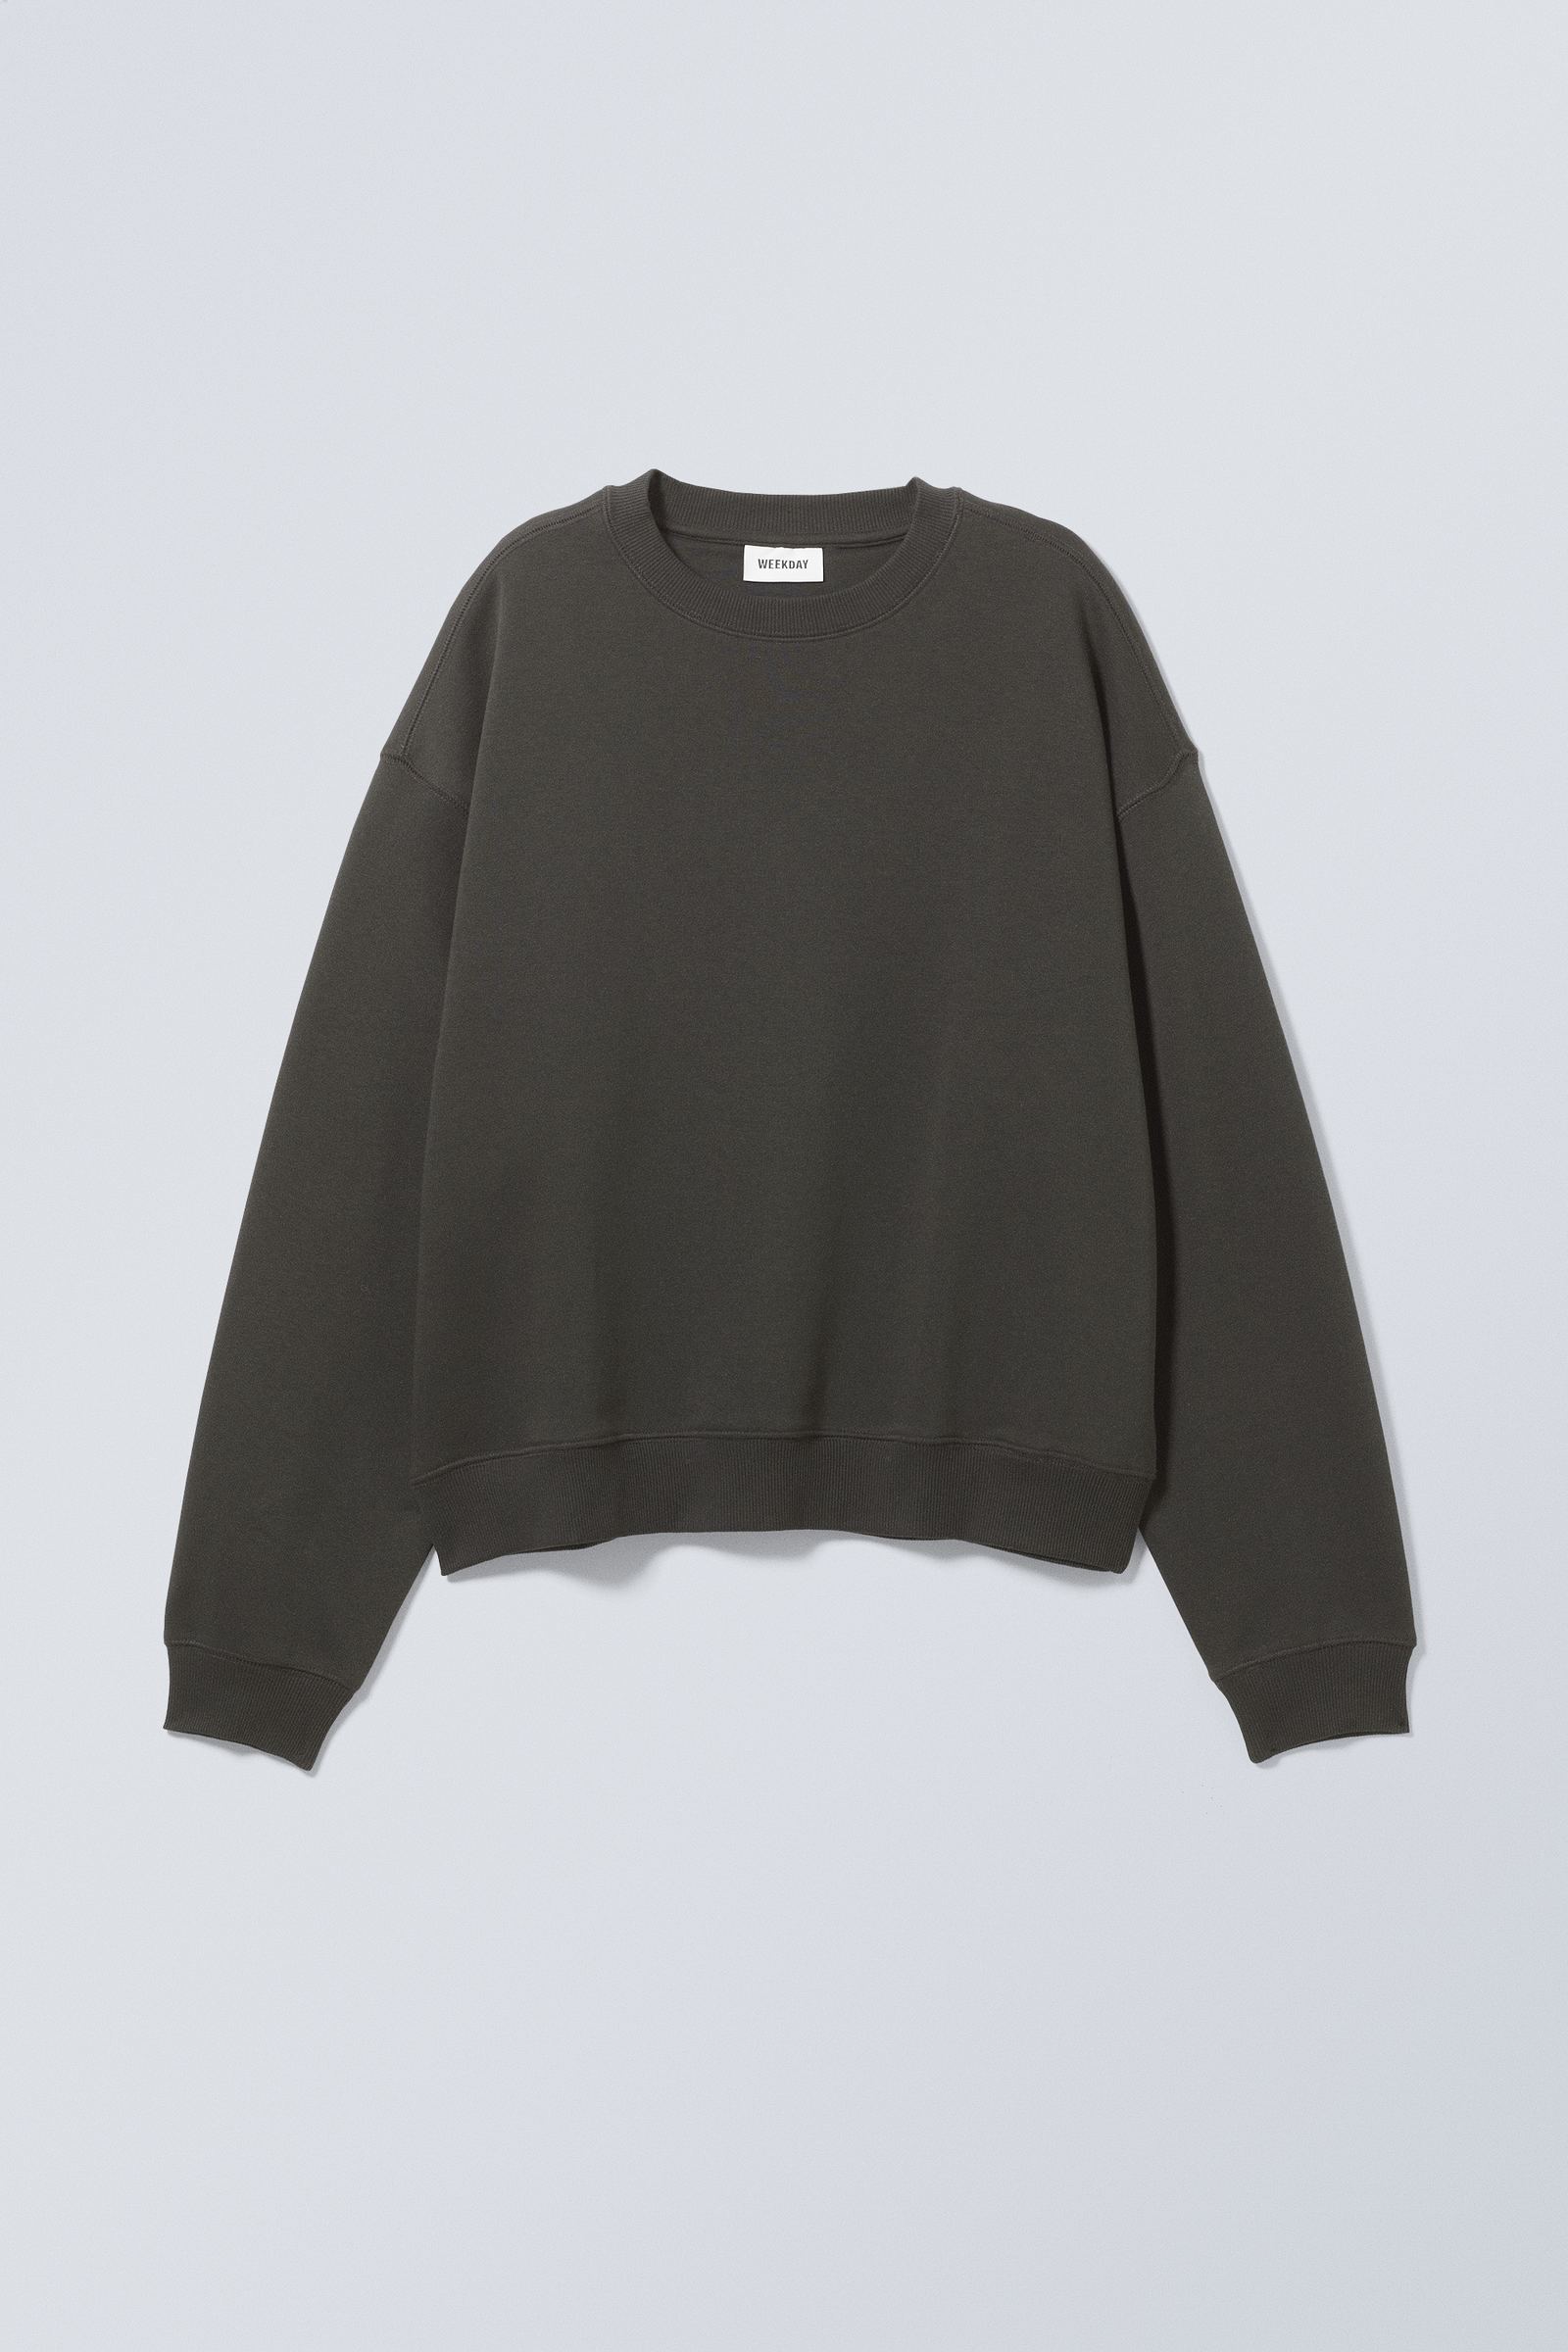 #808080 - Essence Standard Sweatshirt - 1